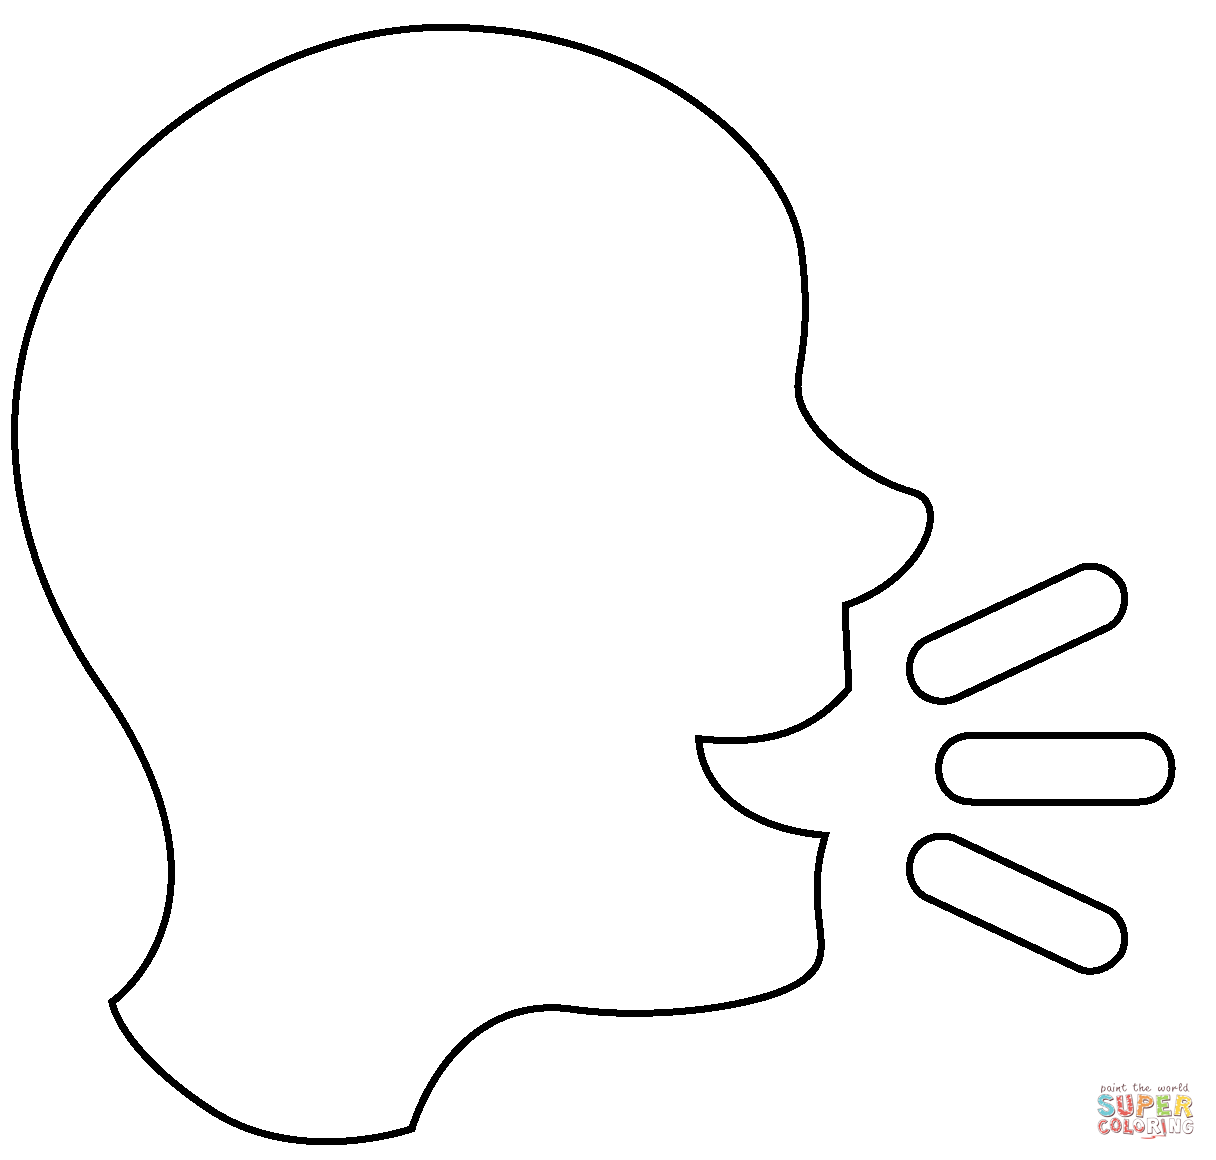 Speaking Head Emoji coloring page | Free Printable Coloring Pages